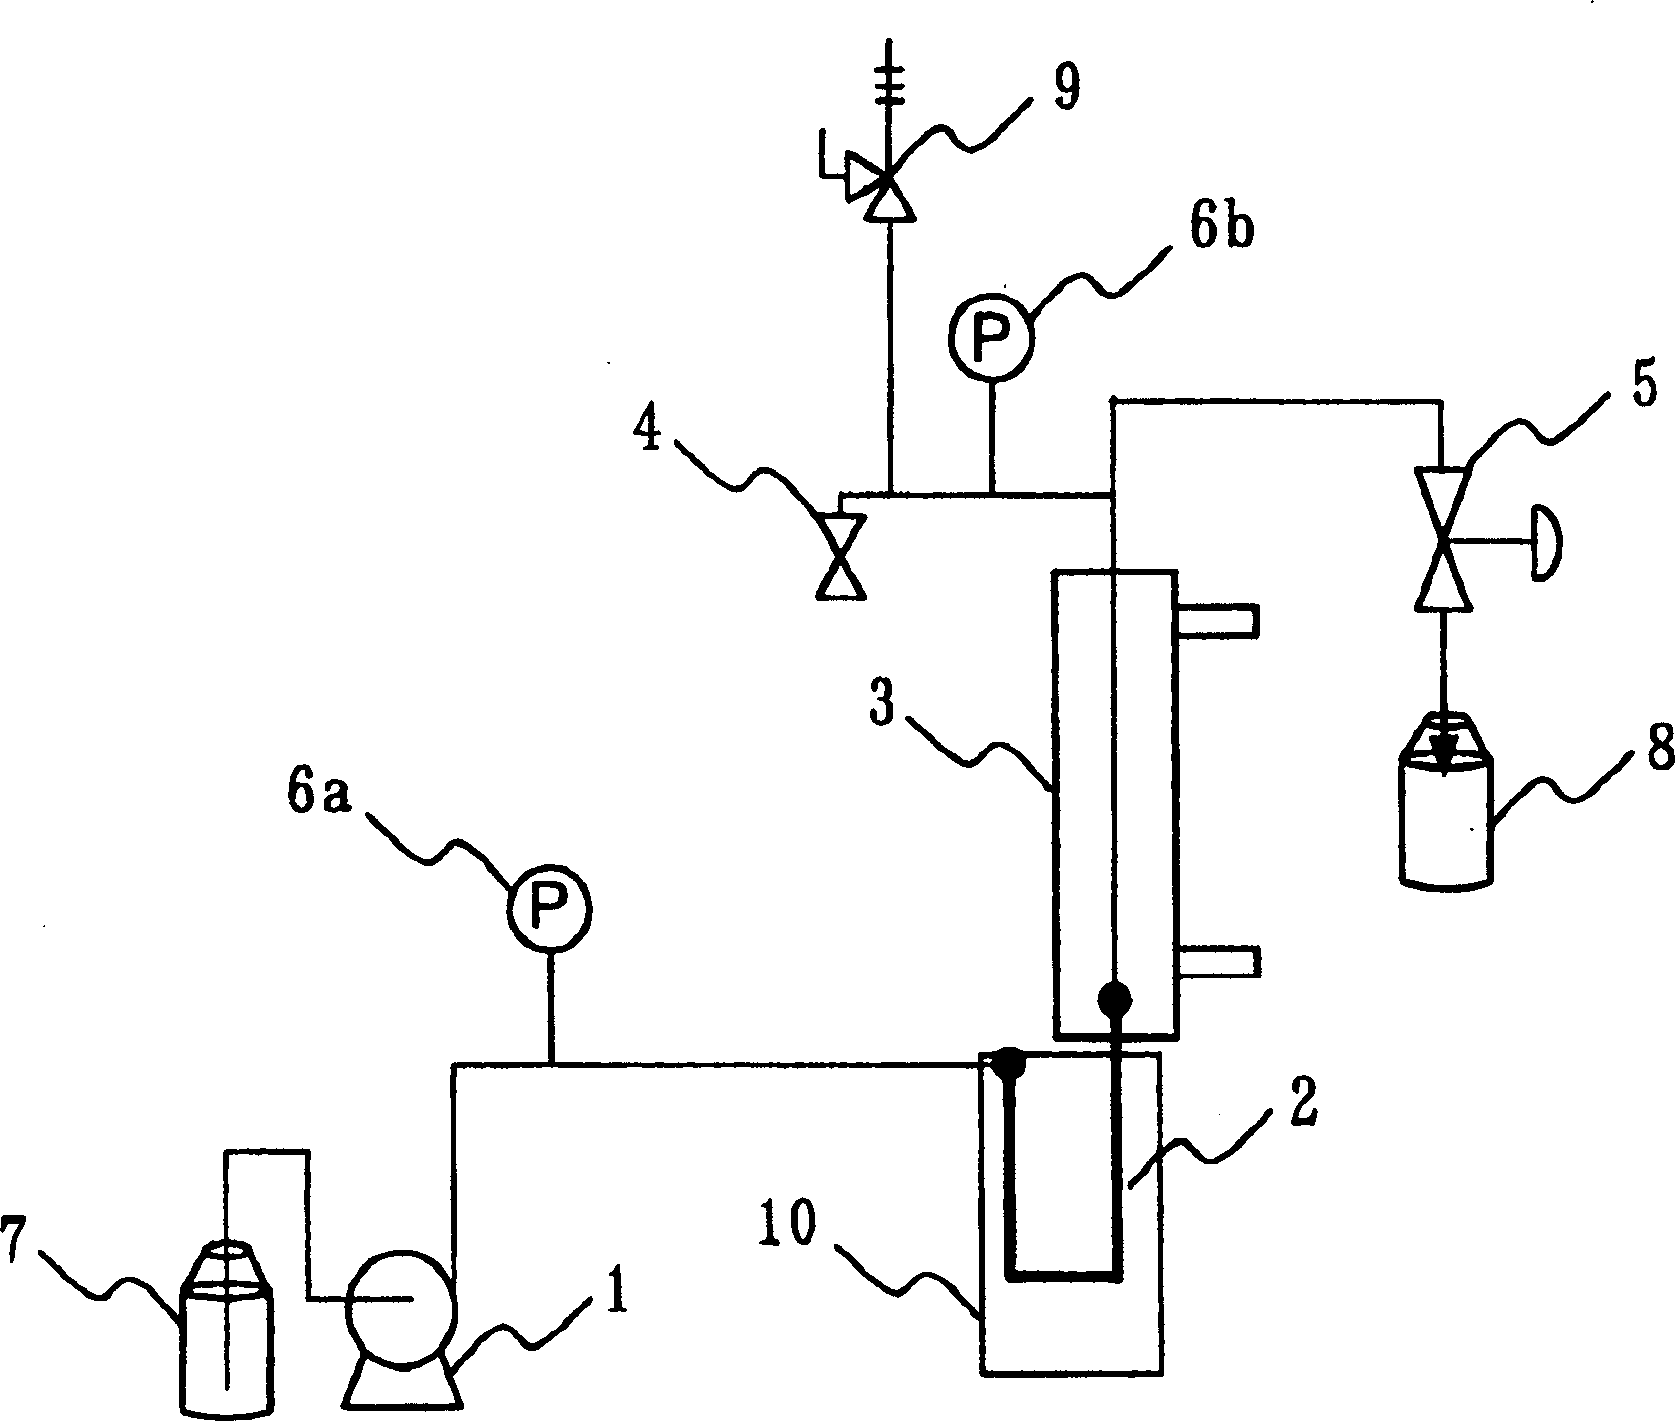 Production process of pyrrolidone carboxylic acid and its salt